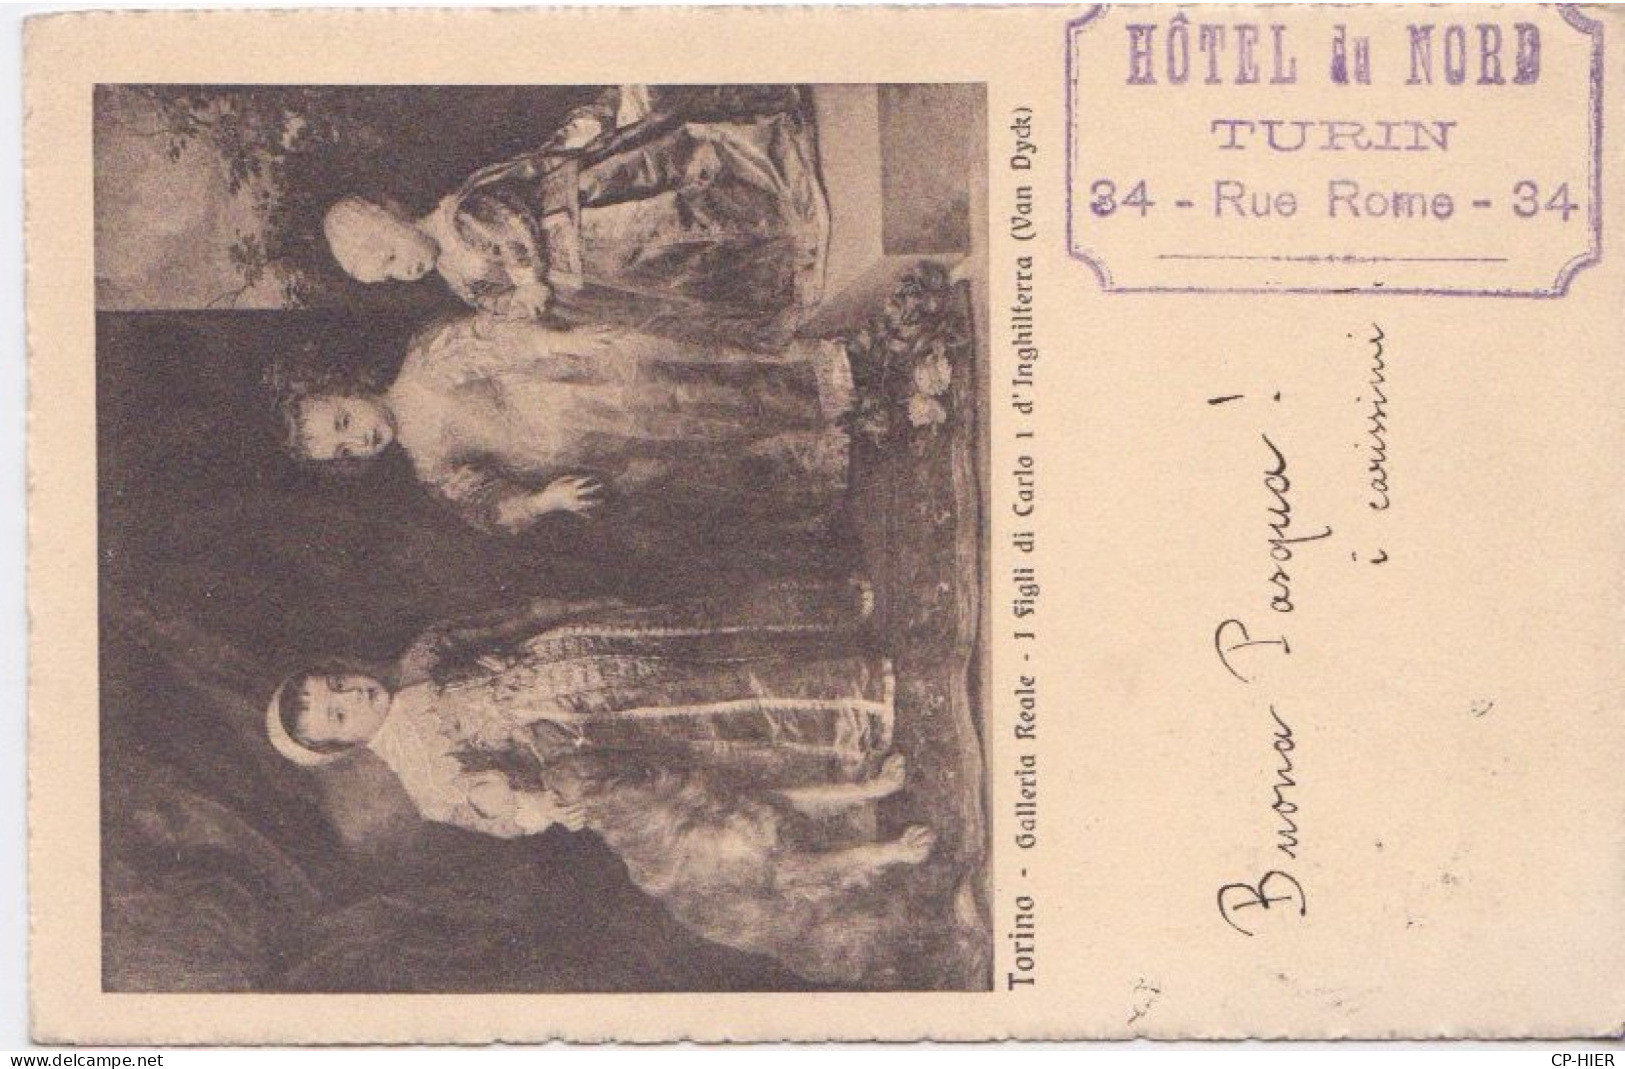 1908 - ITALIE - ITALIA - SICILIA - TORINO - CACHET HOTEL DU NORD DE TURIN  34 RUE DE ROME - Wirtschaften, Hotels & Restaurants